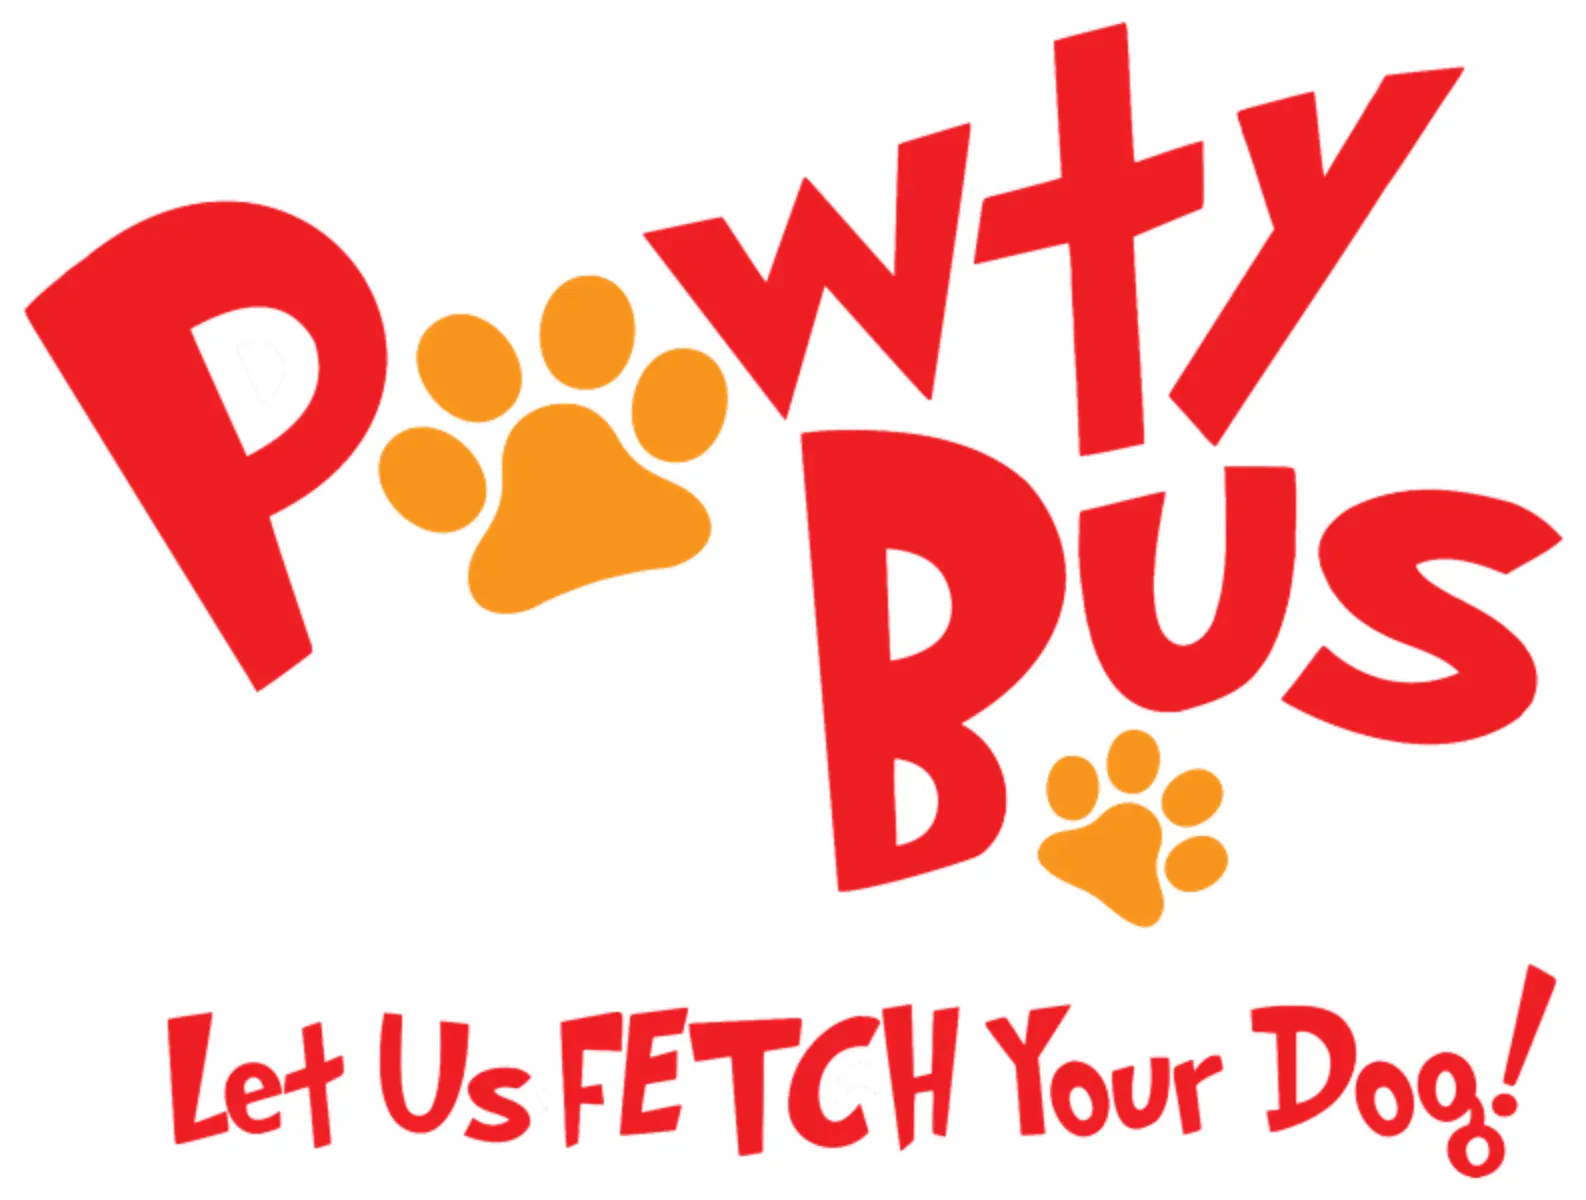 Pawty Bus Dog Taxi Logo